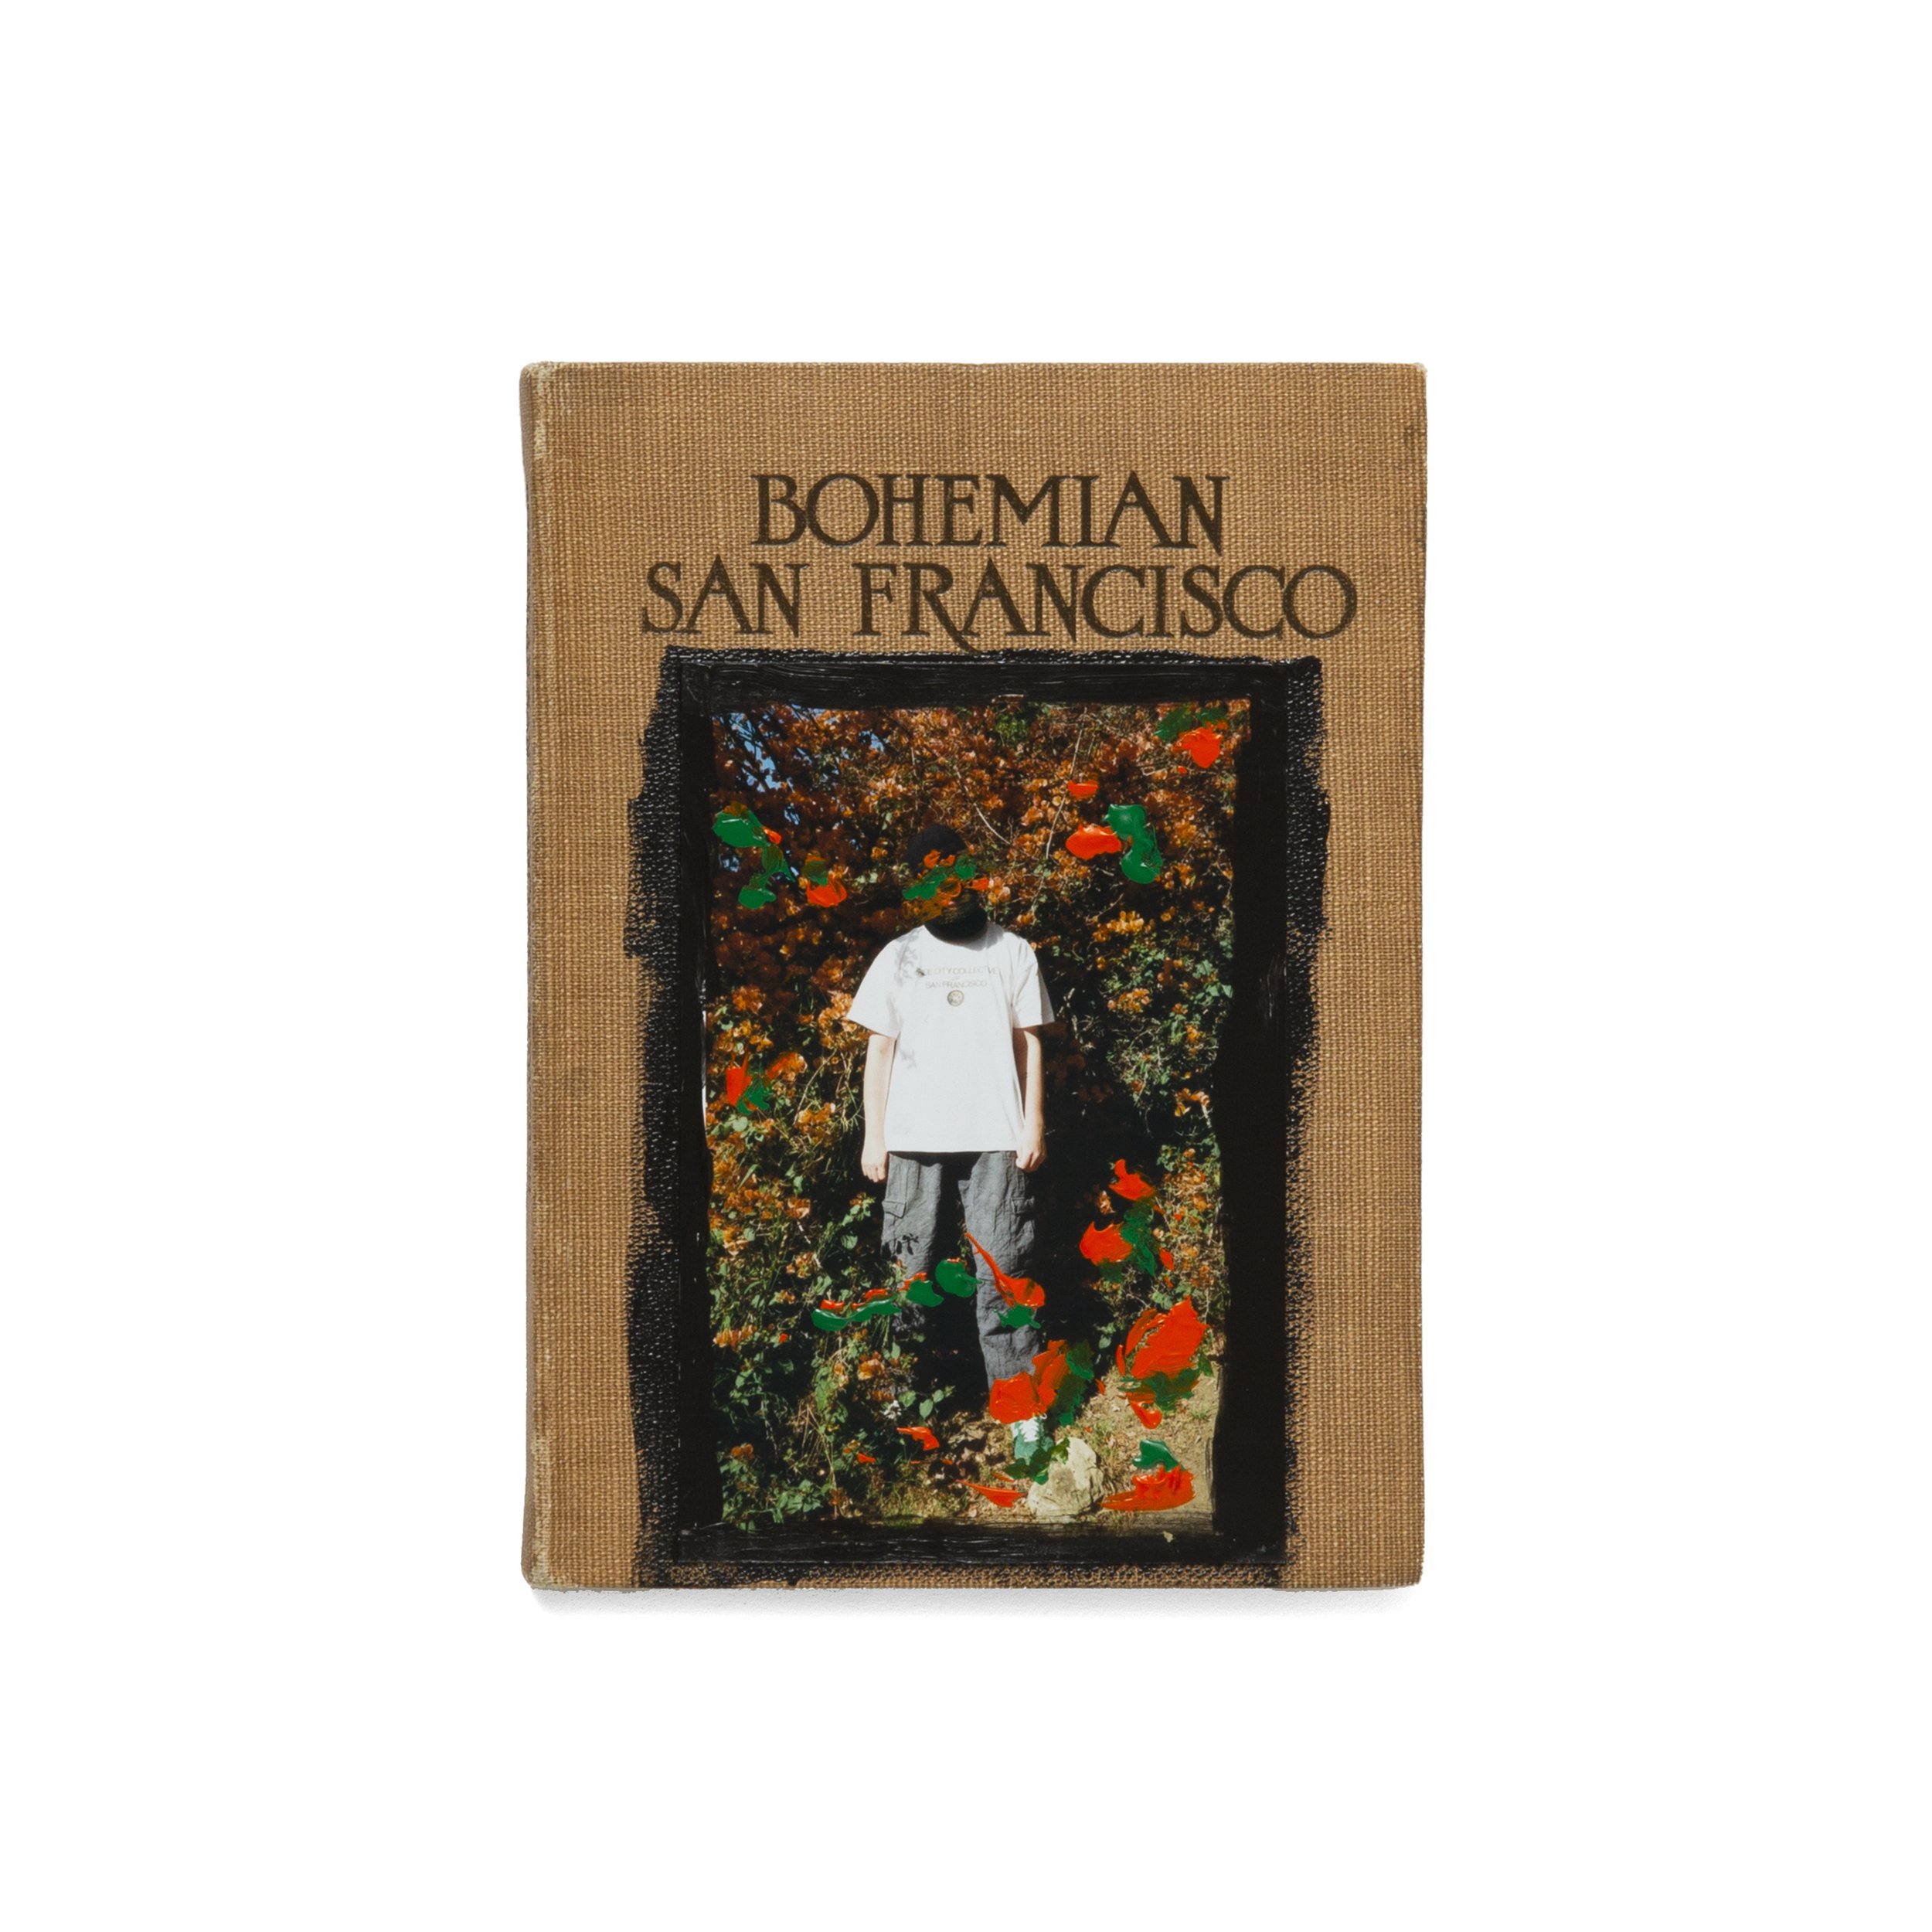 Bohemian San Francisco Cover.JPG